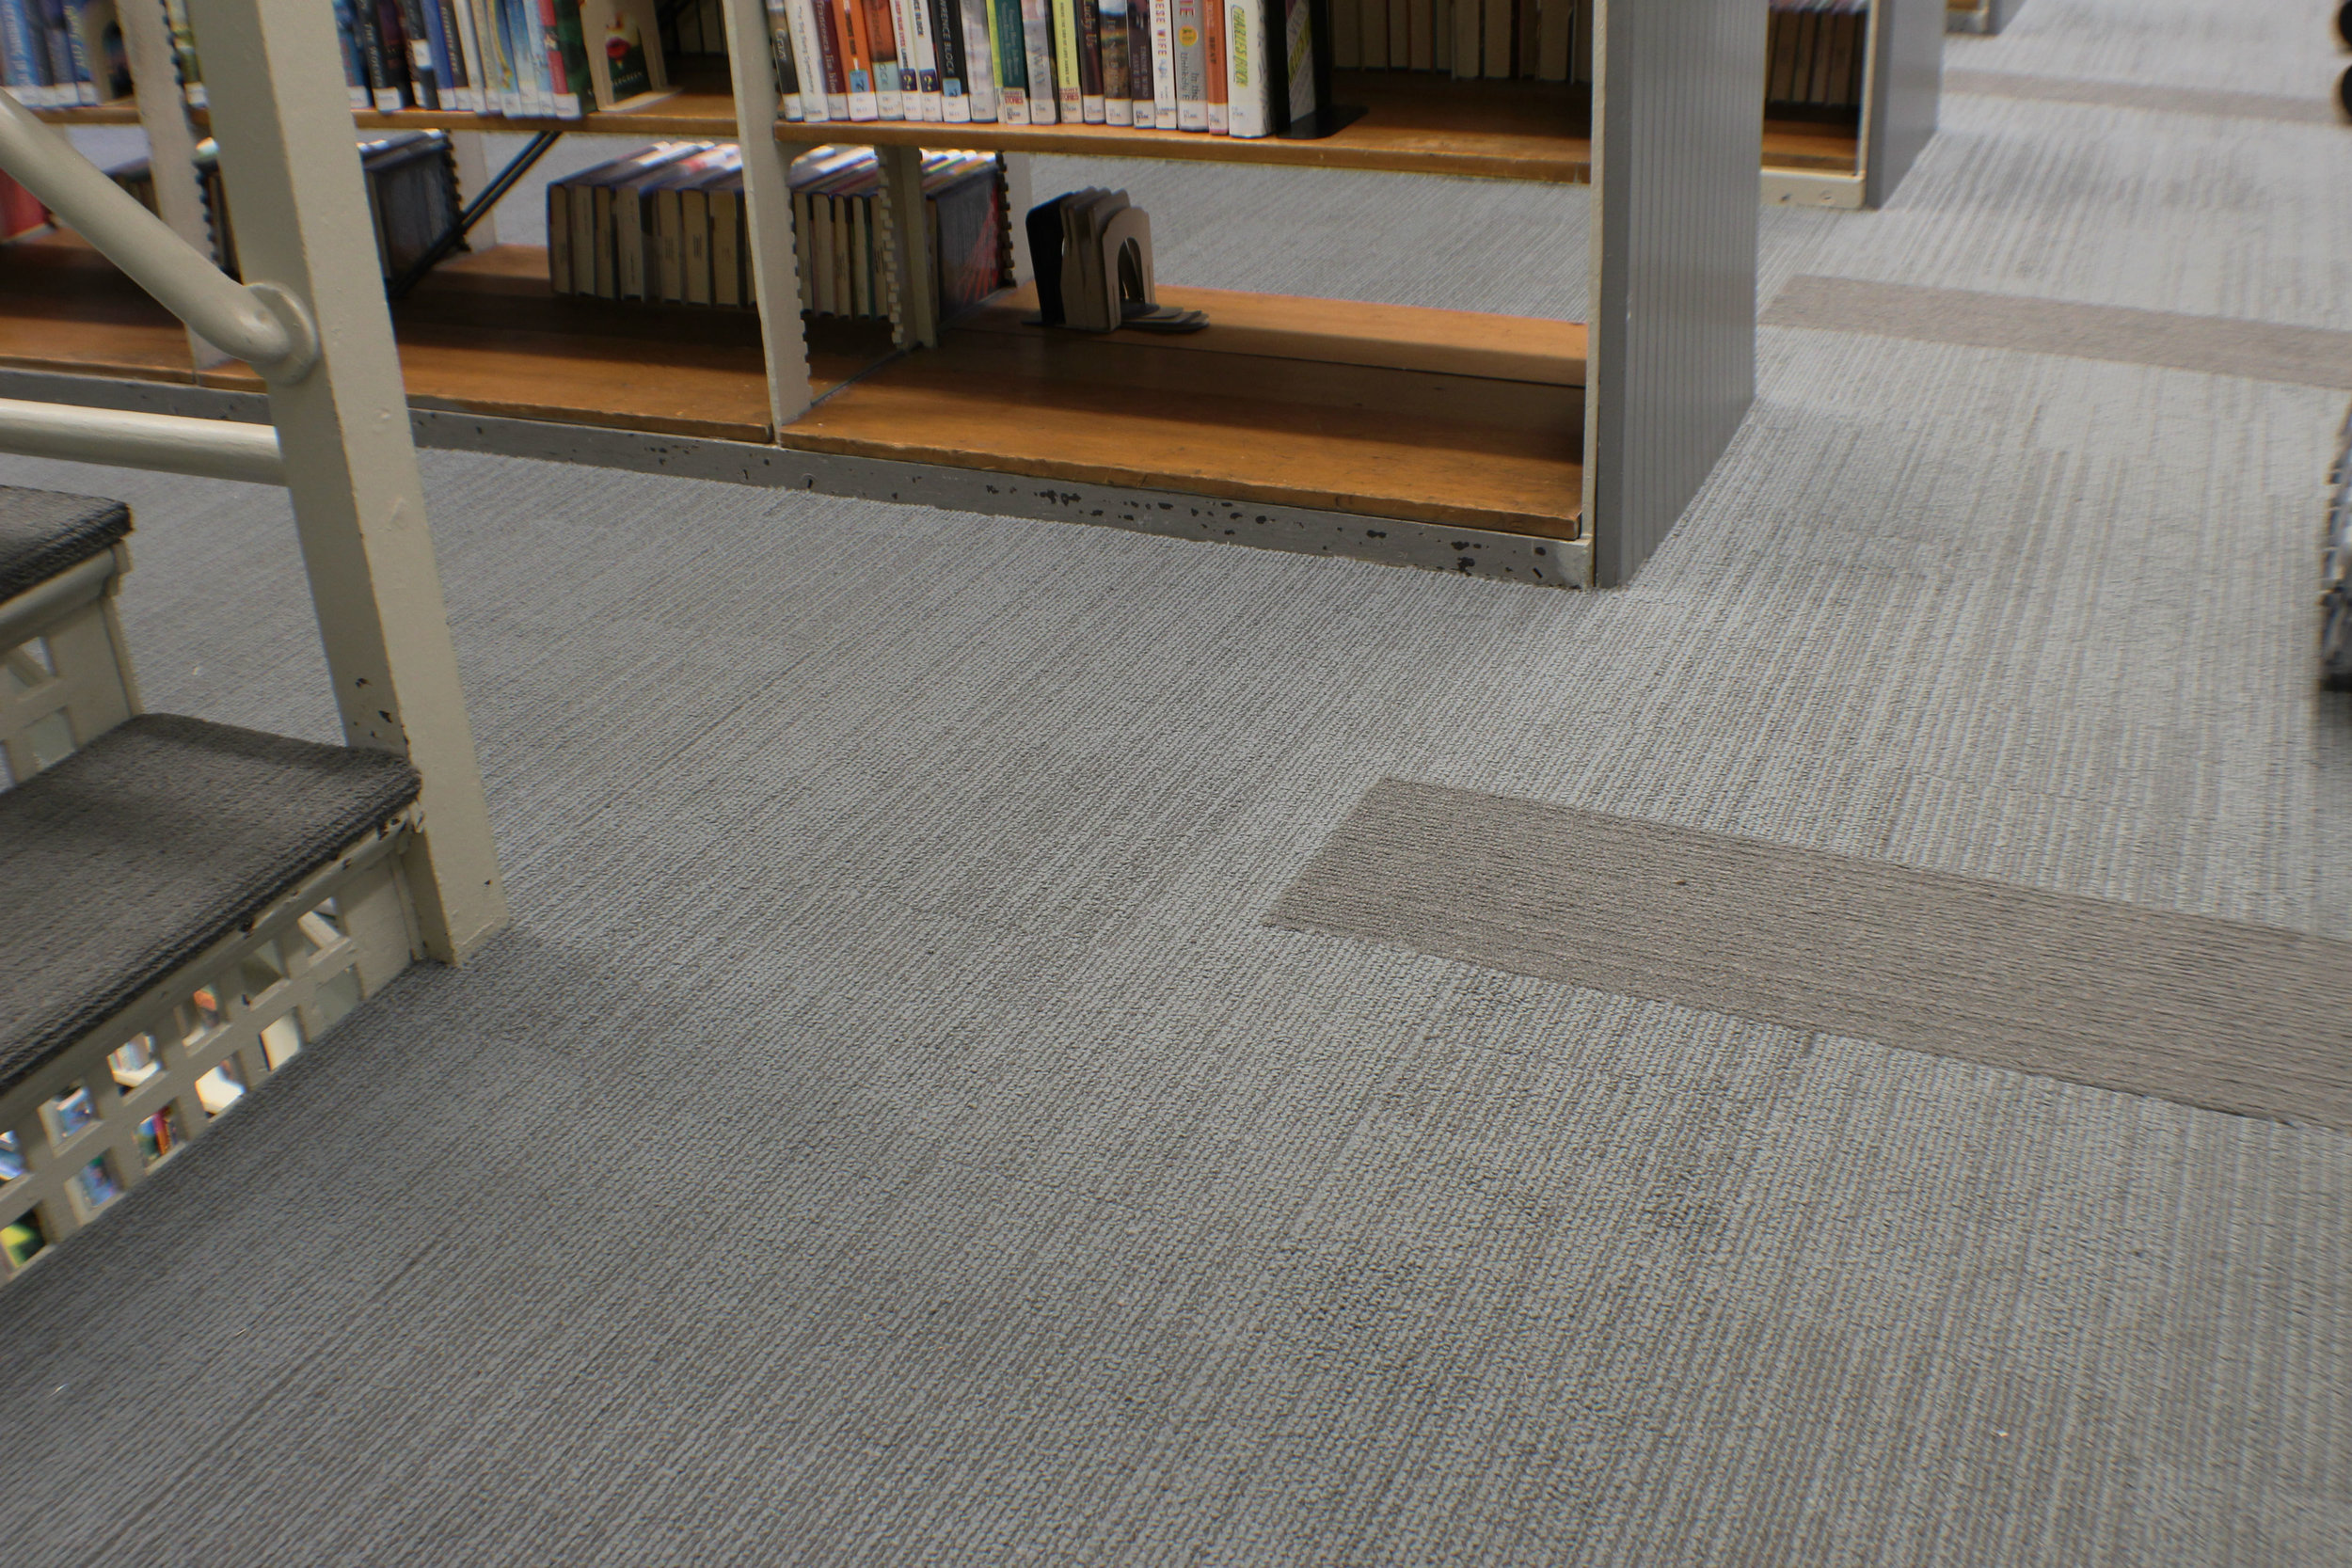 Dedham Public Library x Atkinson Carpet & Flooring